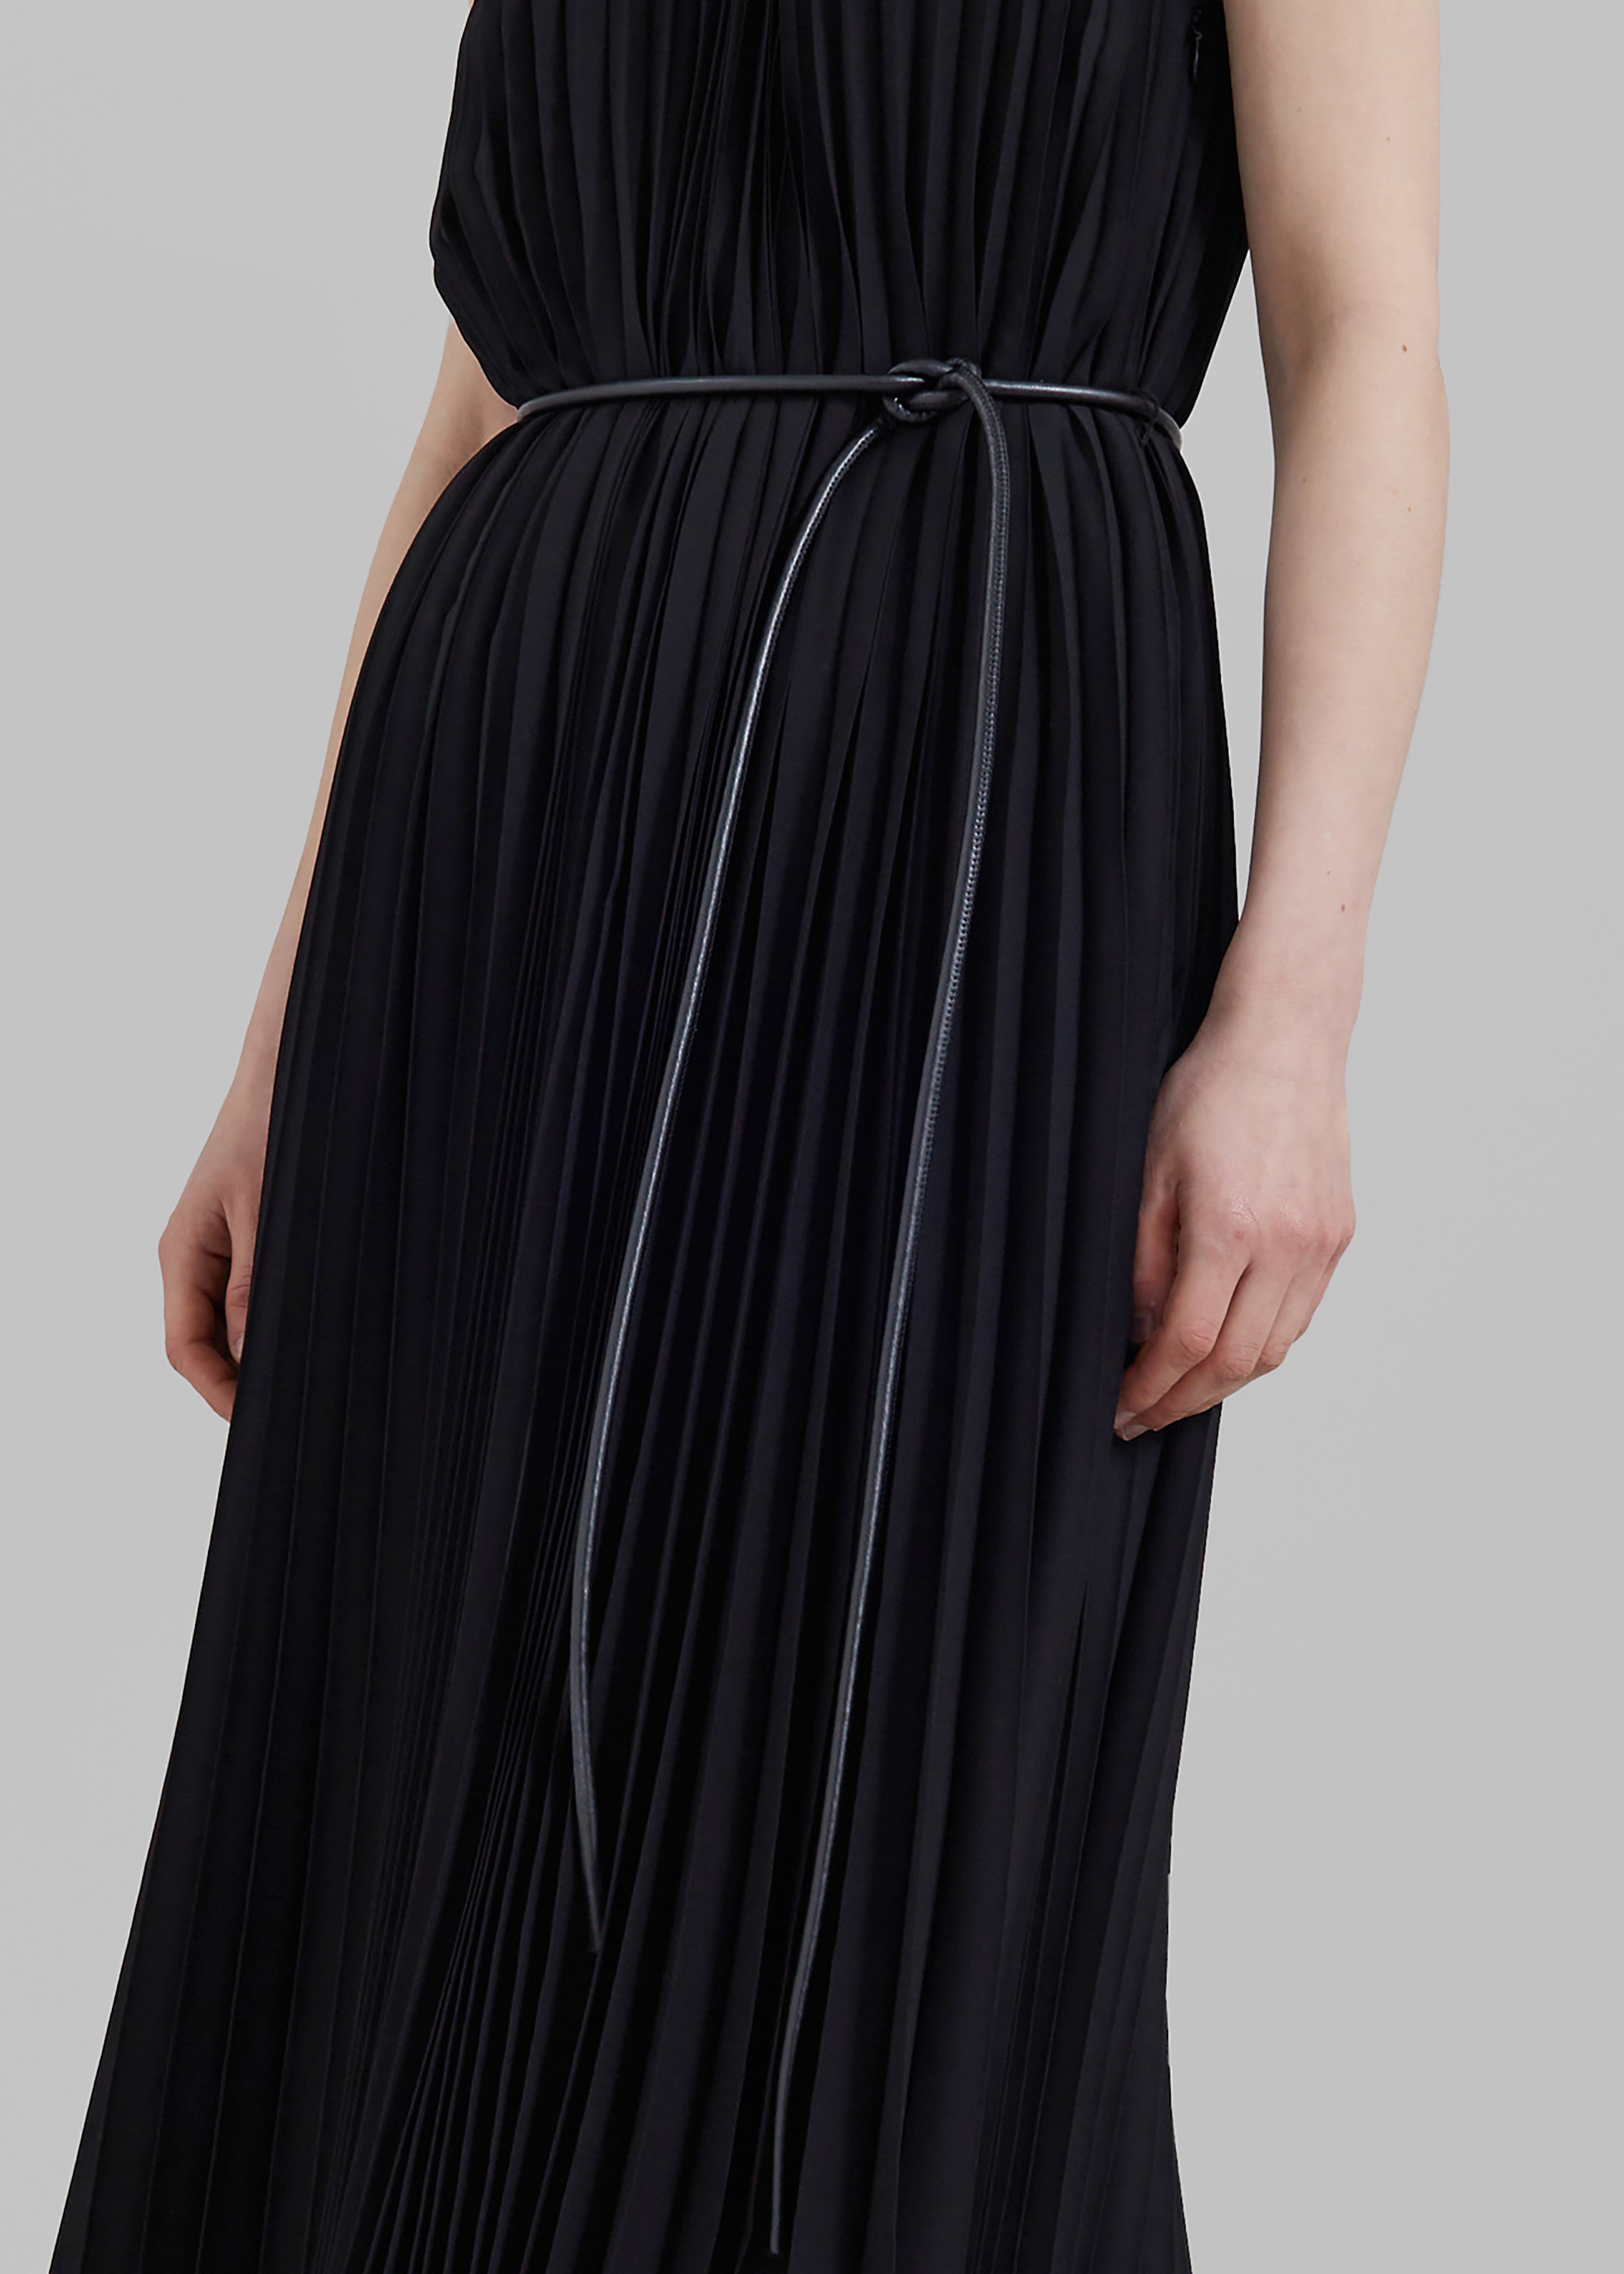 Proenza Schouler White Label Celeste Lightweight Crepe Dress  - Black - 6